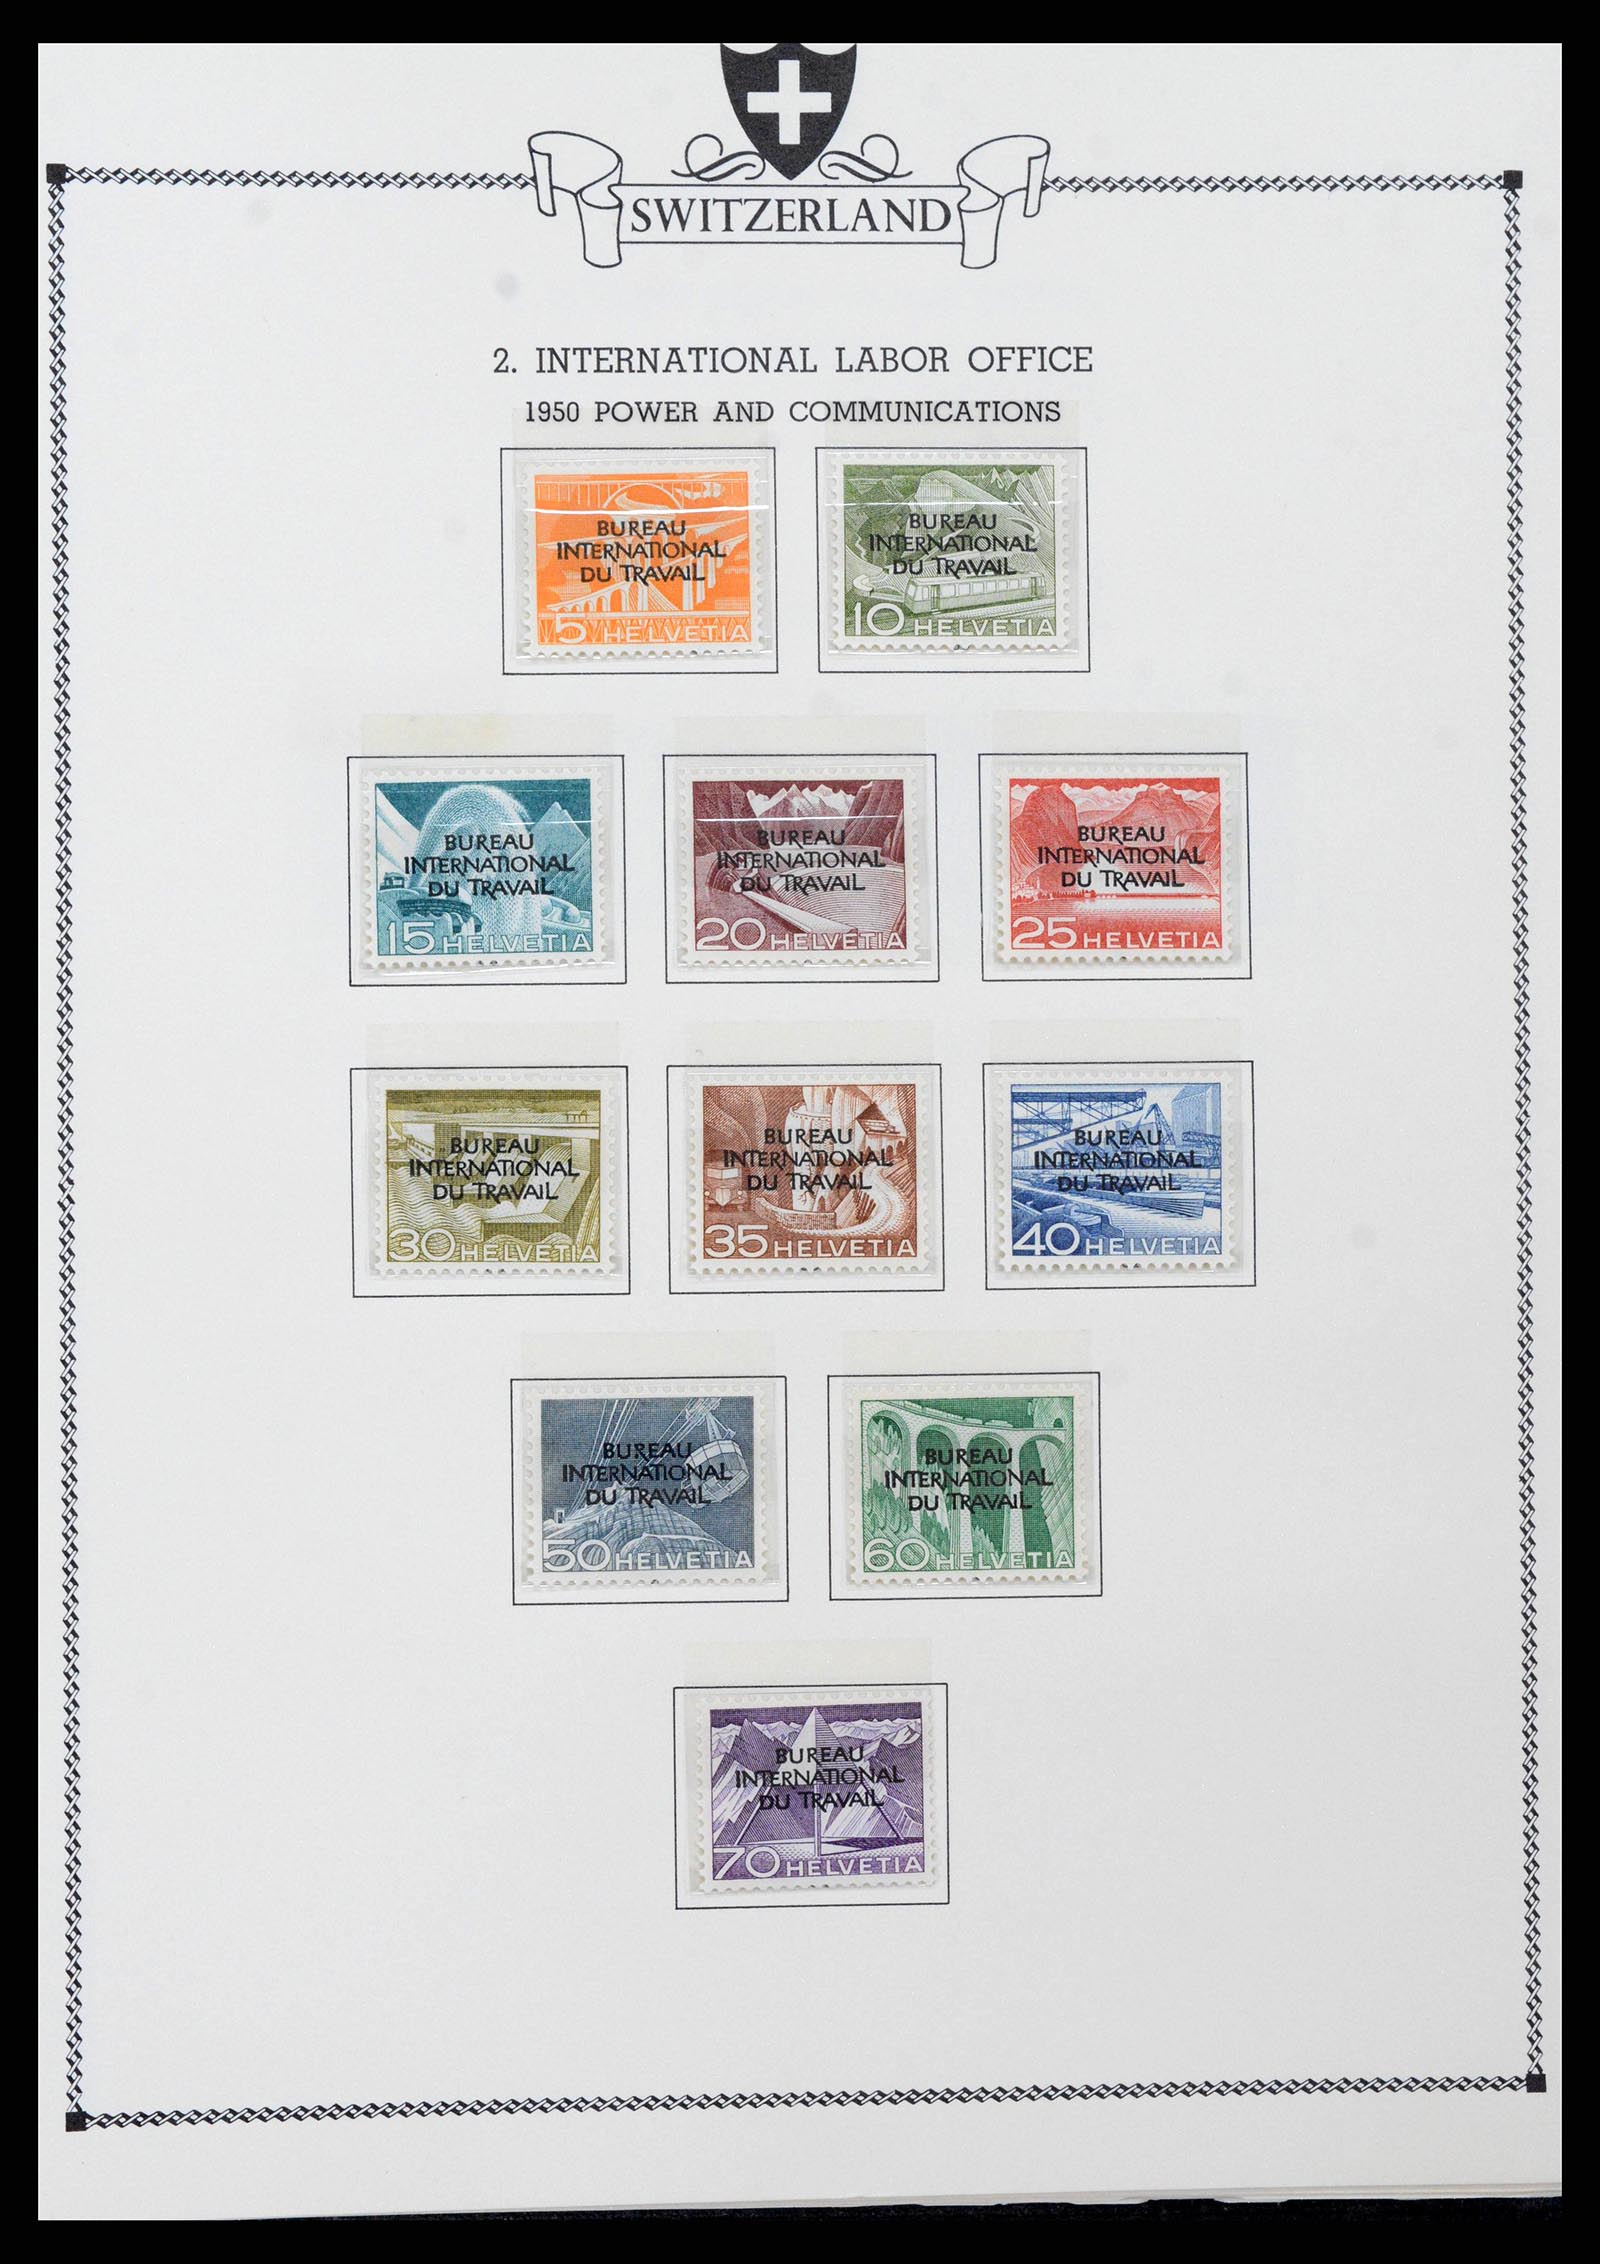 38905 0196 - Stamp collection 38905 Switzerland 1850-1995.